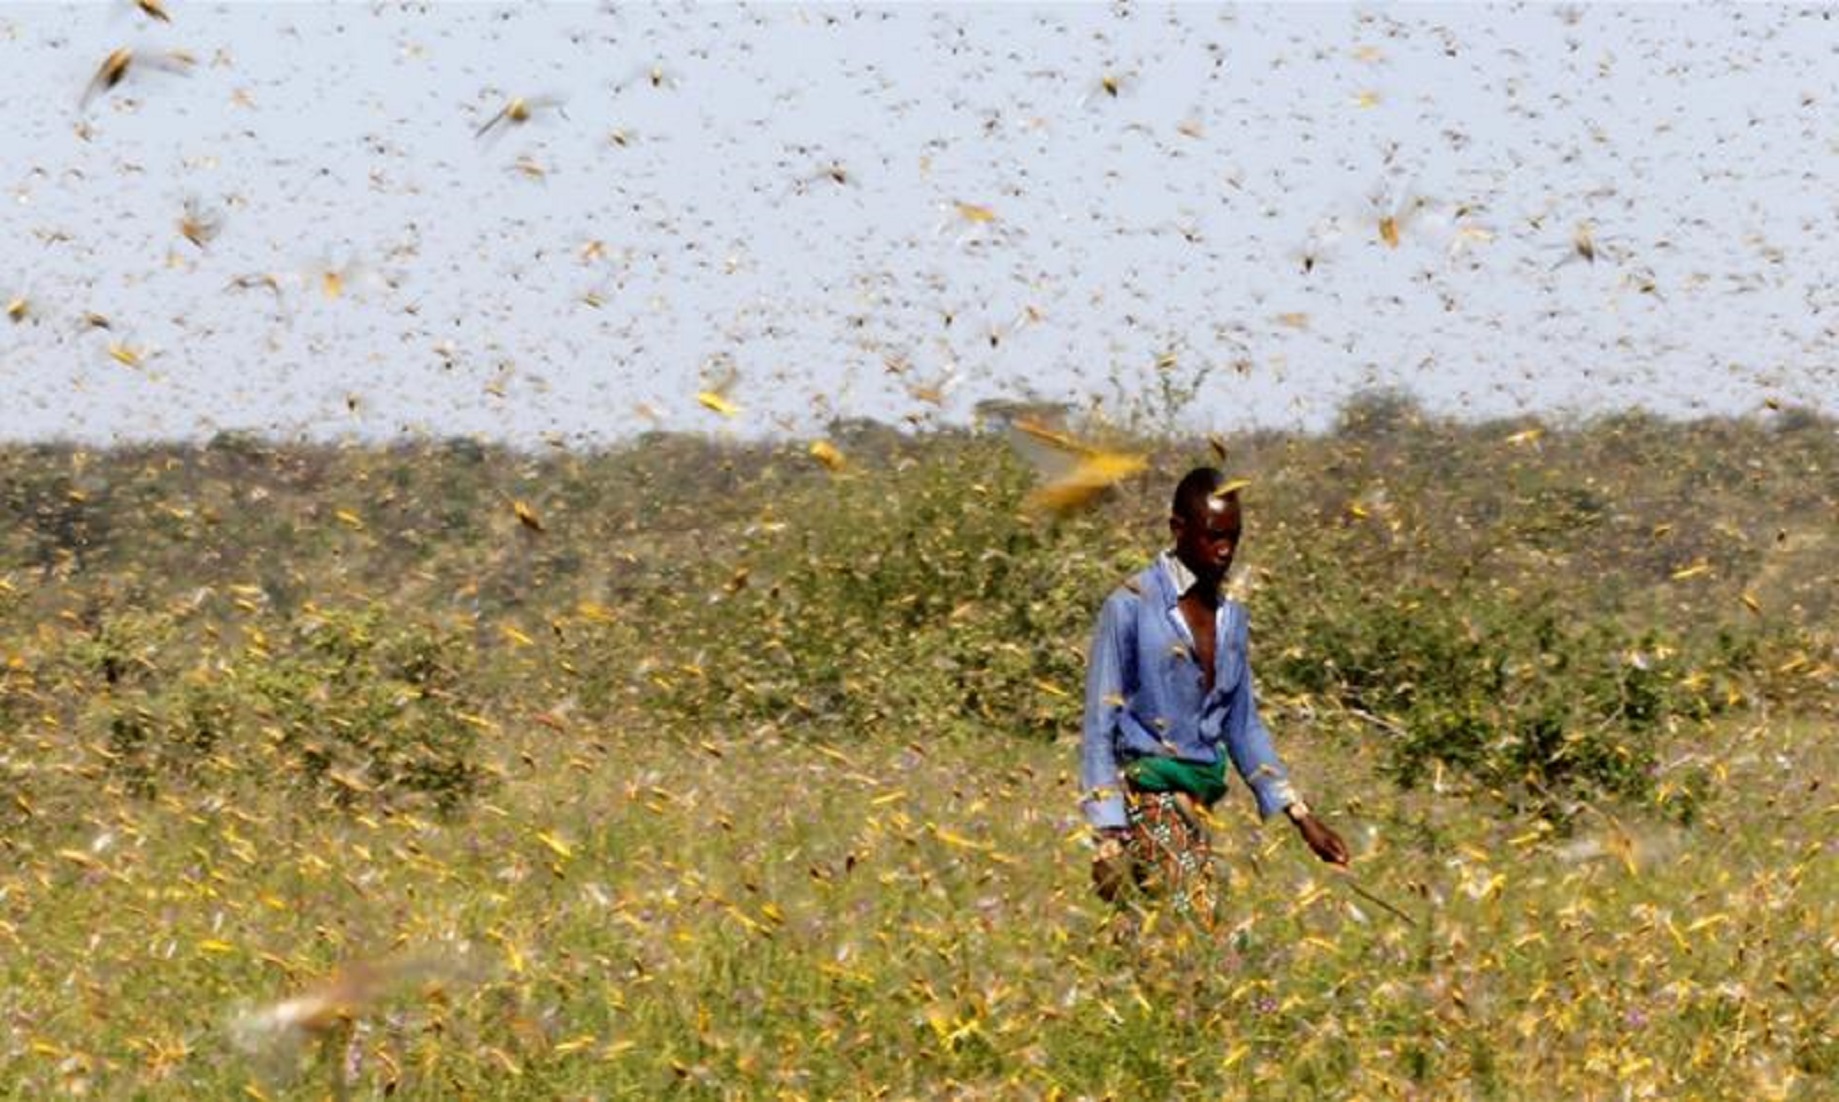 Covid-19: East Africa locust swarms gather as coronavirus curbs delay pesticides – UN